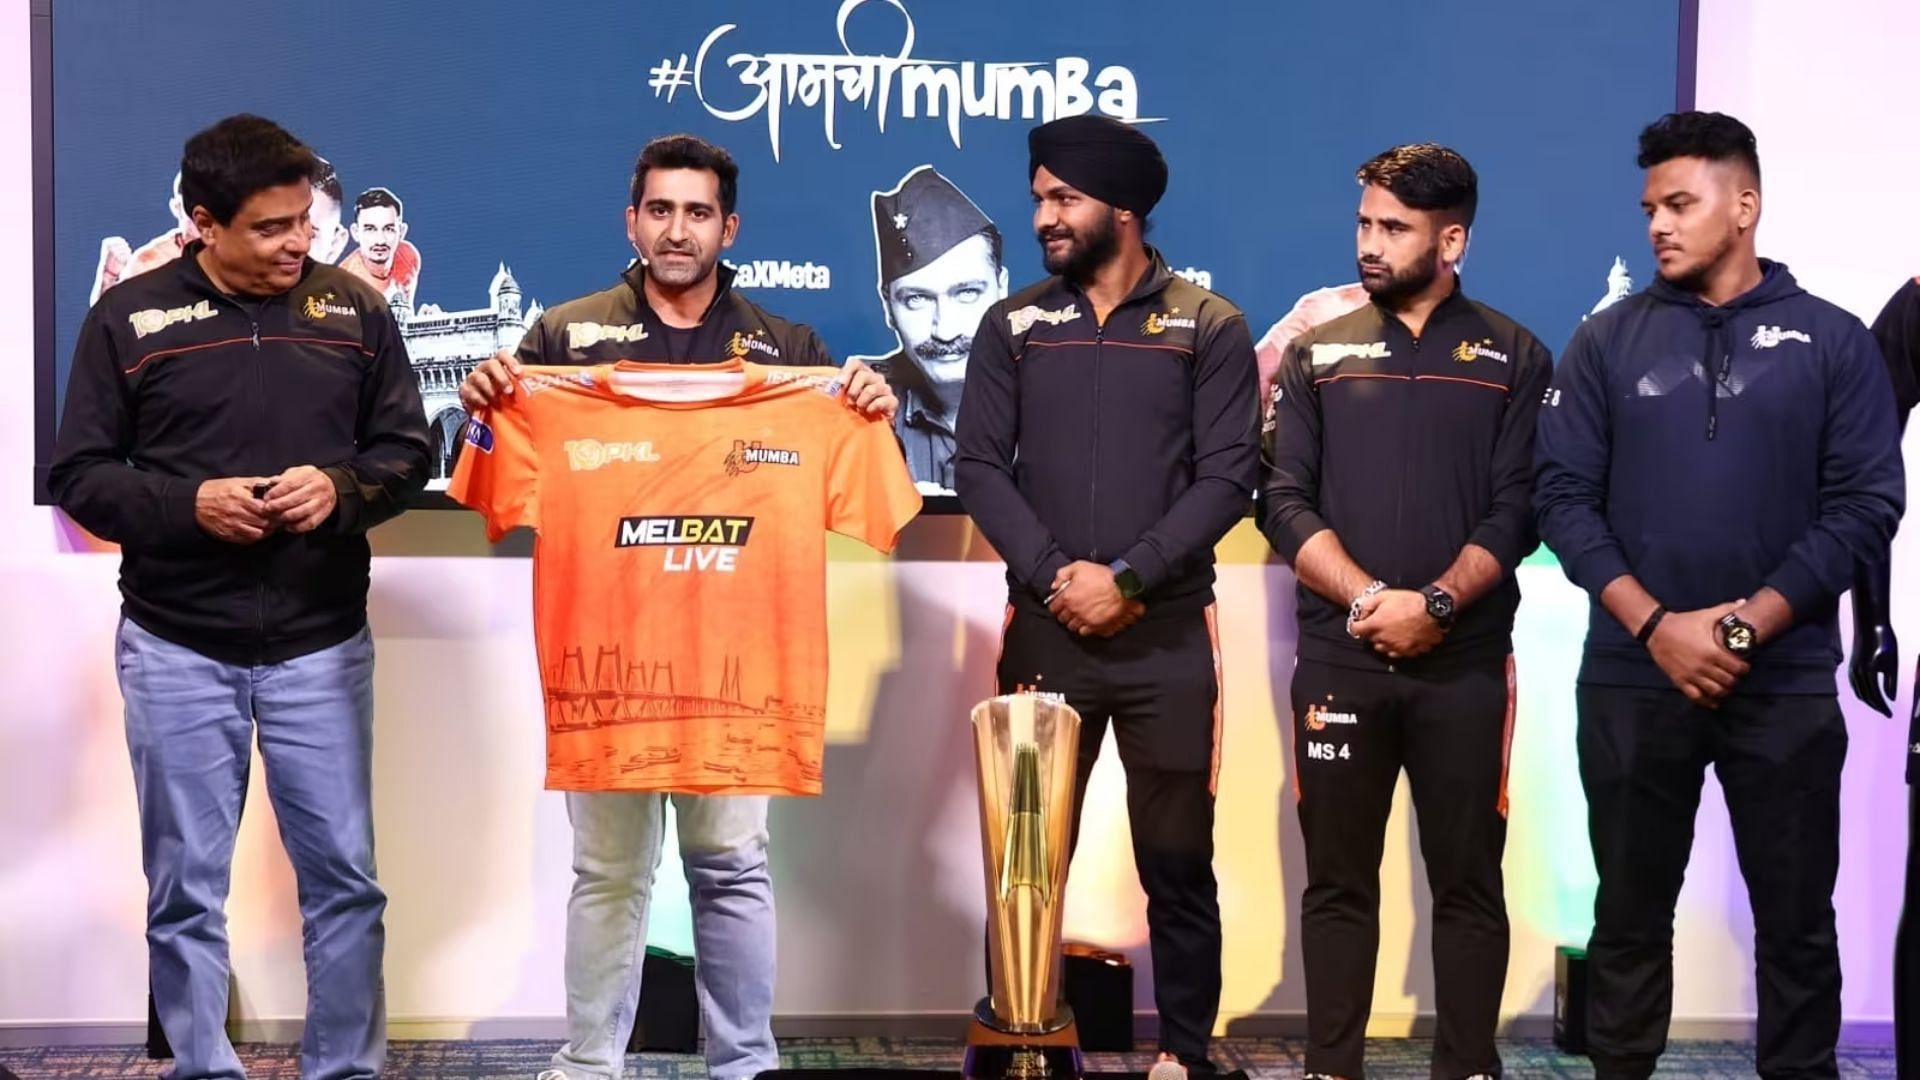 U Mumba team with their skipper Surinder Singh (Image via Pro Kaddi League)